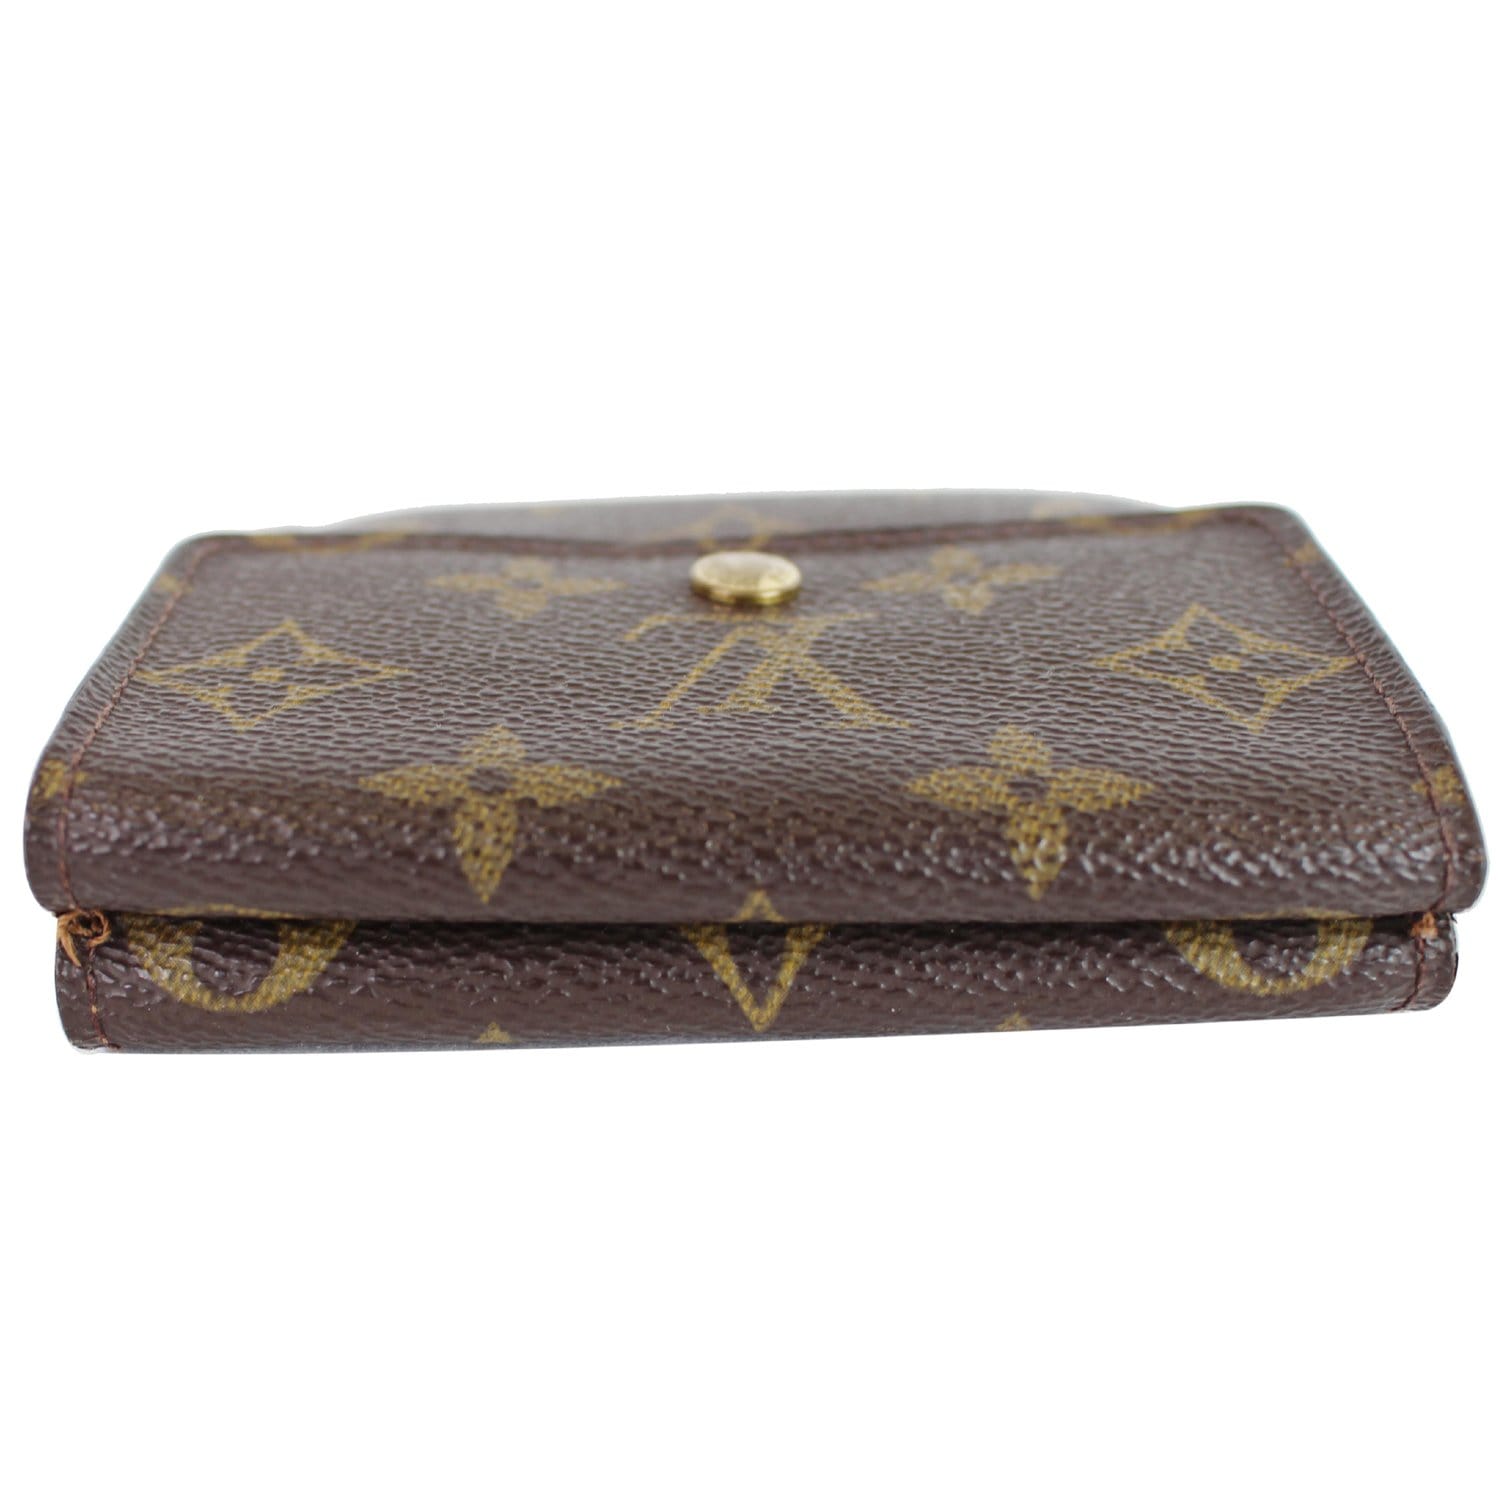 Louis Vuitton, Bags, Lv Bifold Monogram Wallet